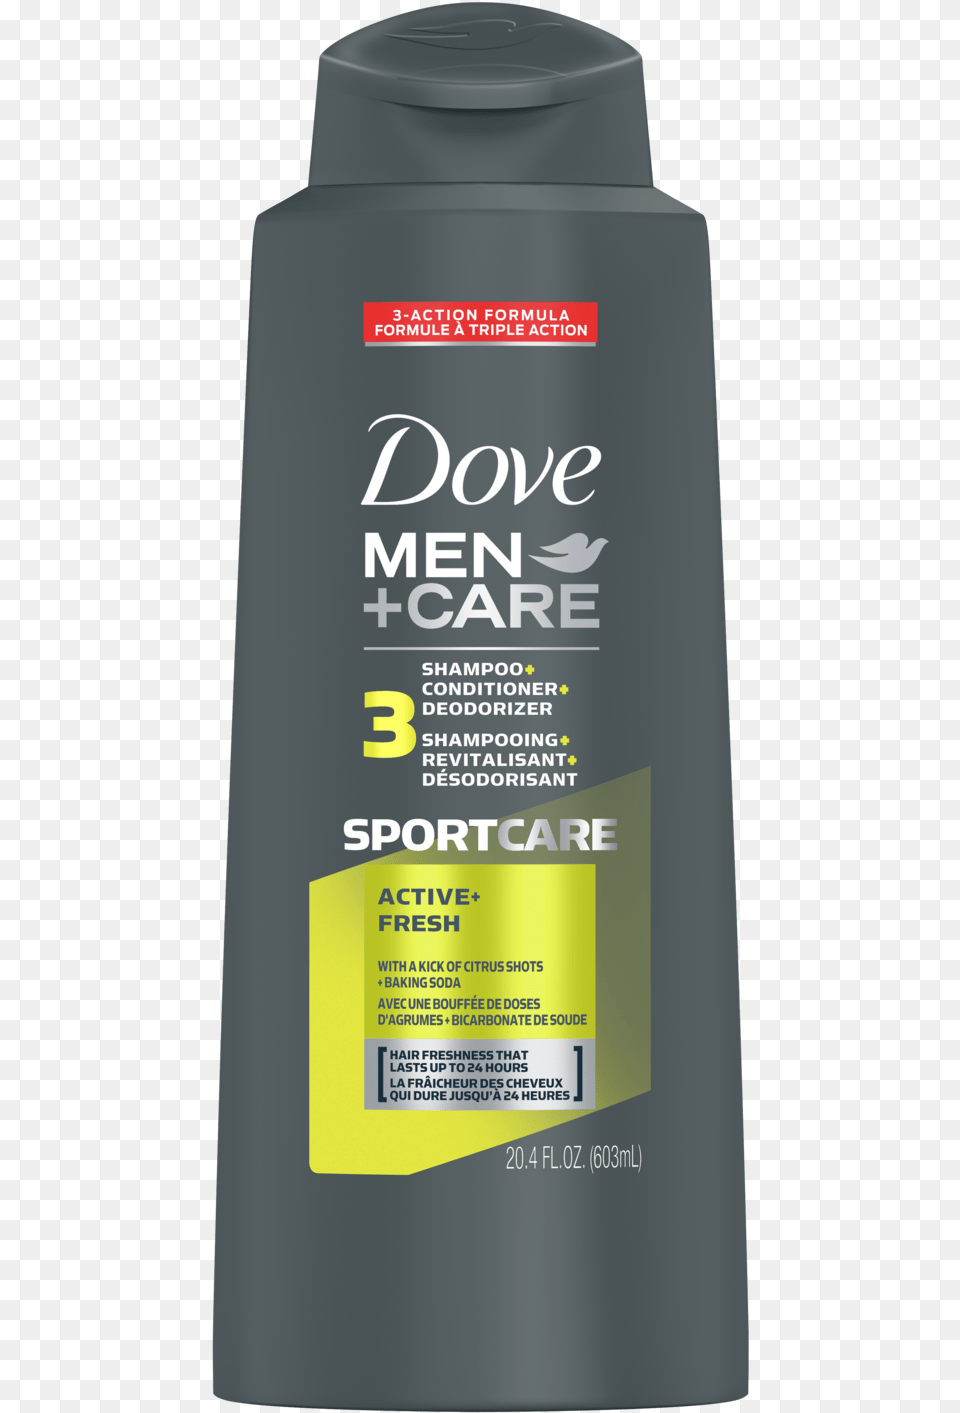 Dove Men Care Sportcare, Bottle, Cosmetics Png Image